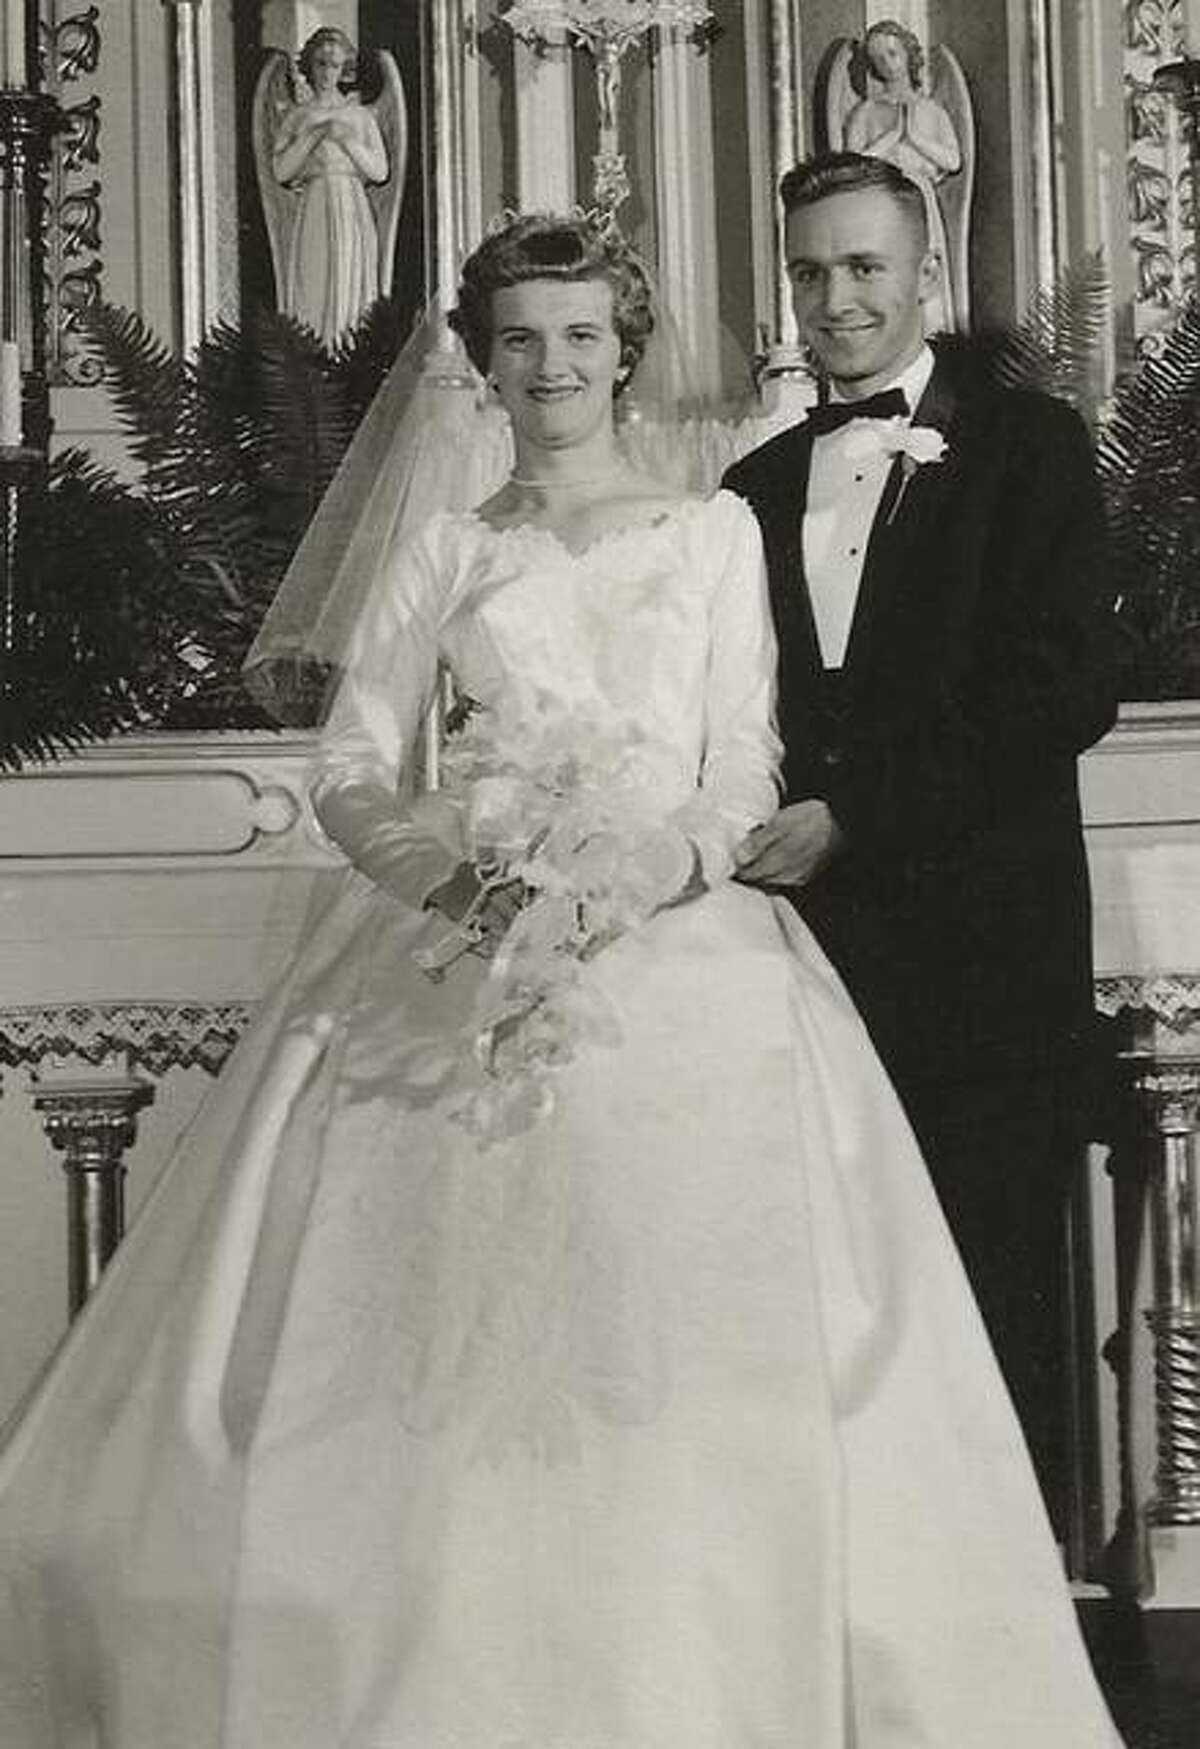 Joseph and Agnes Wegener at their wedding.